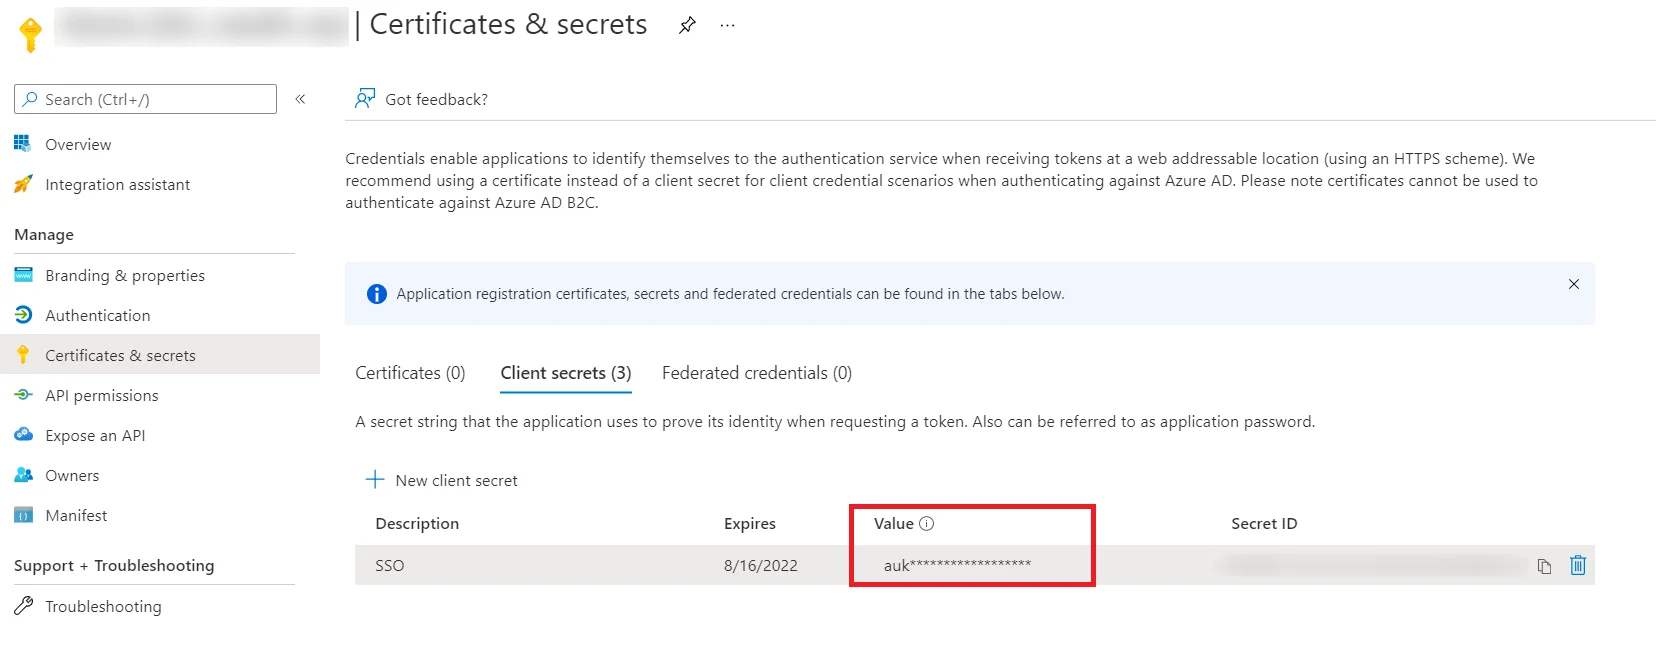 nopCommerce OAuth Single Sign-On (SSO) using Azure AD (Microsoft Entra ID) as IDP - Secret-Key-2